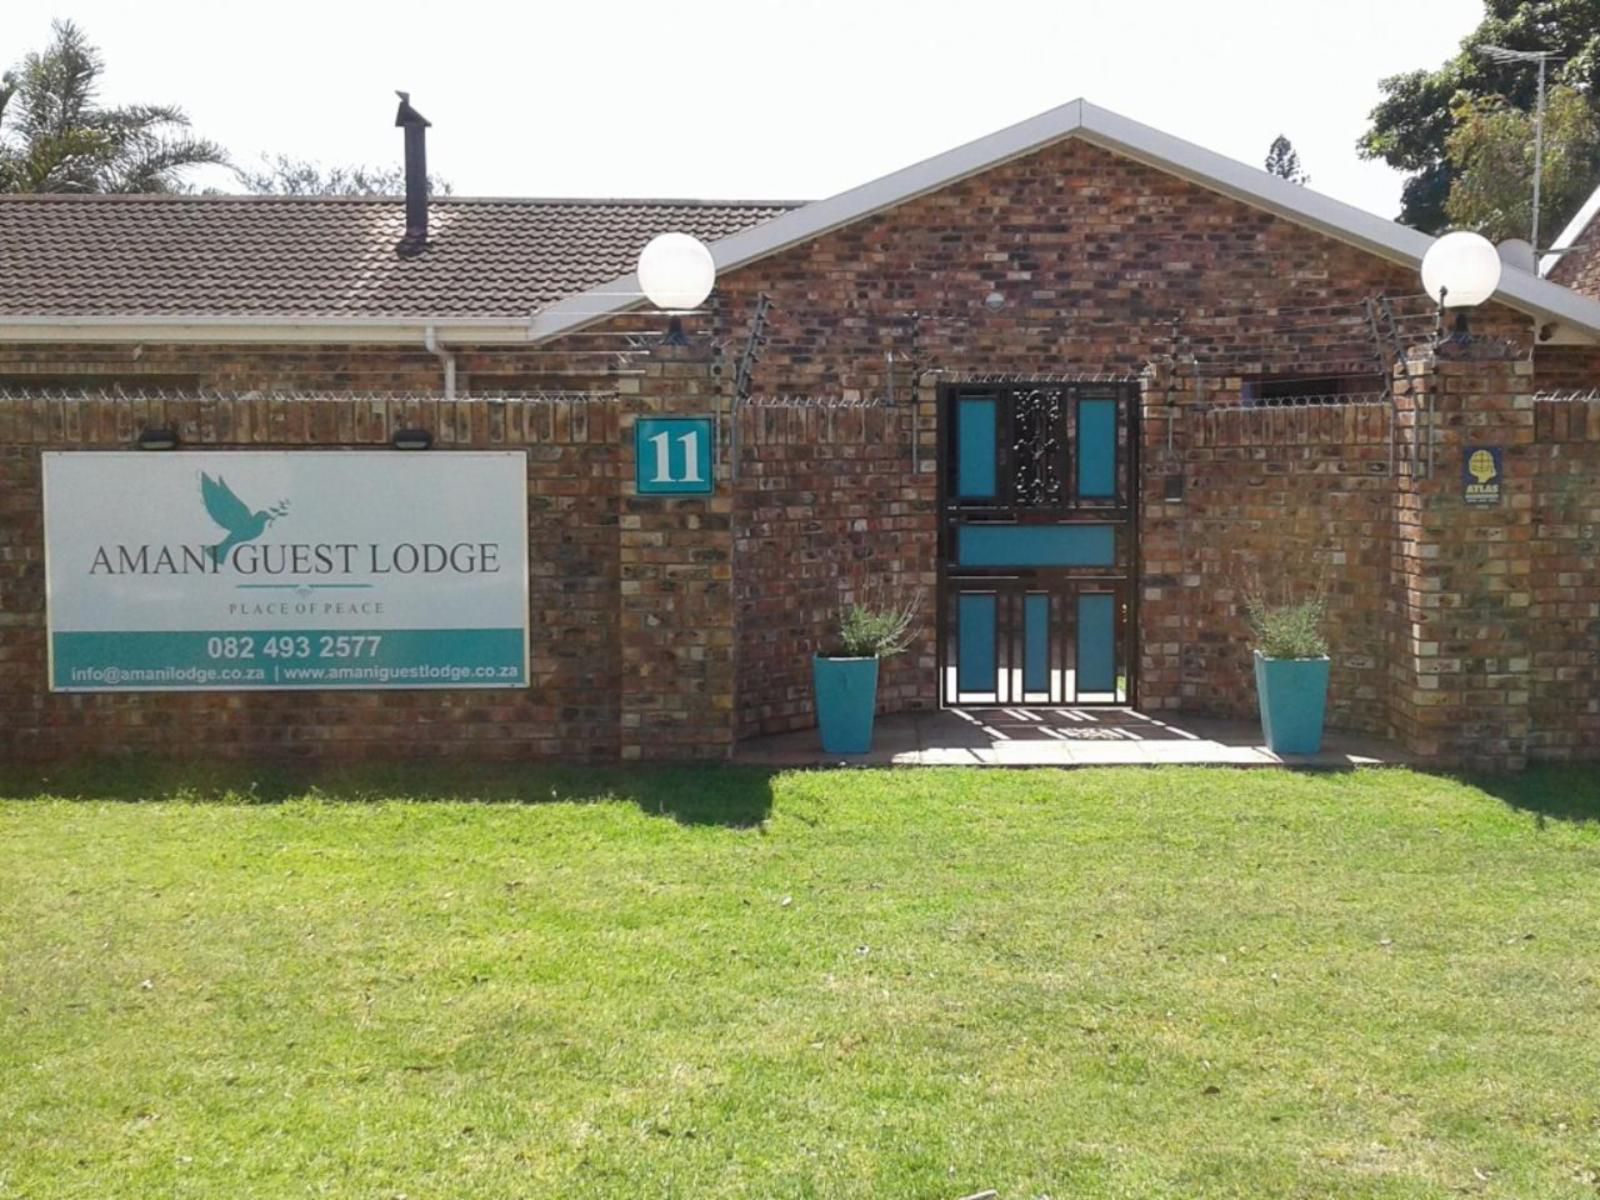 Amani Guest Lodge Walmer Port Elizabeth Eastern Cape South Africa House, Building, Architecture